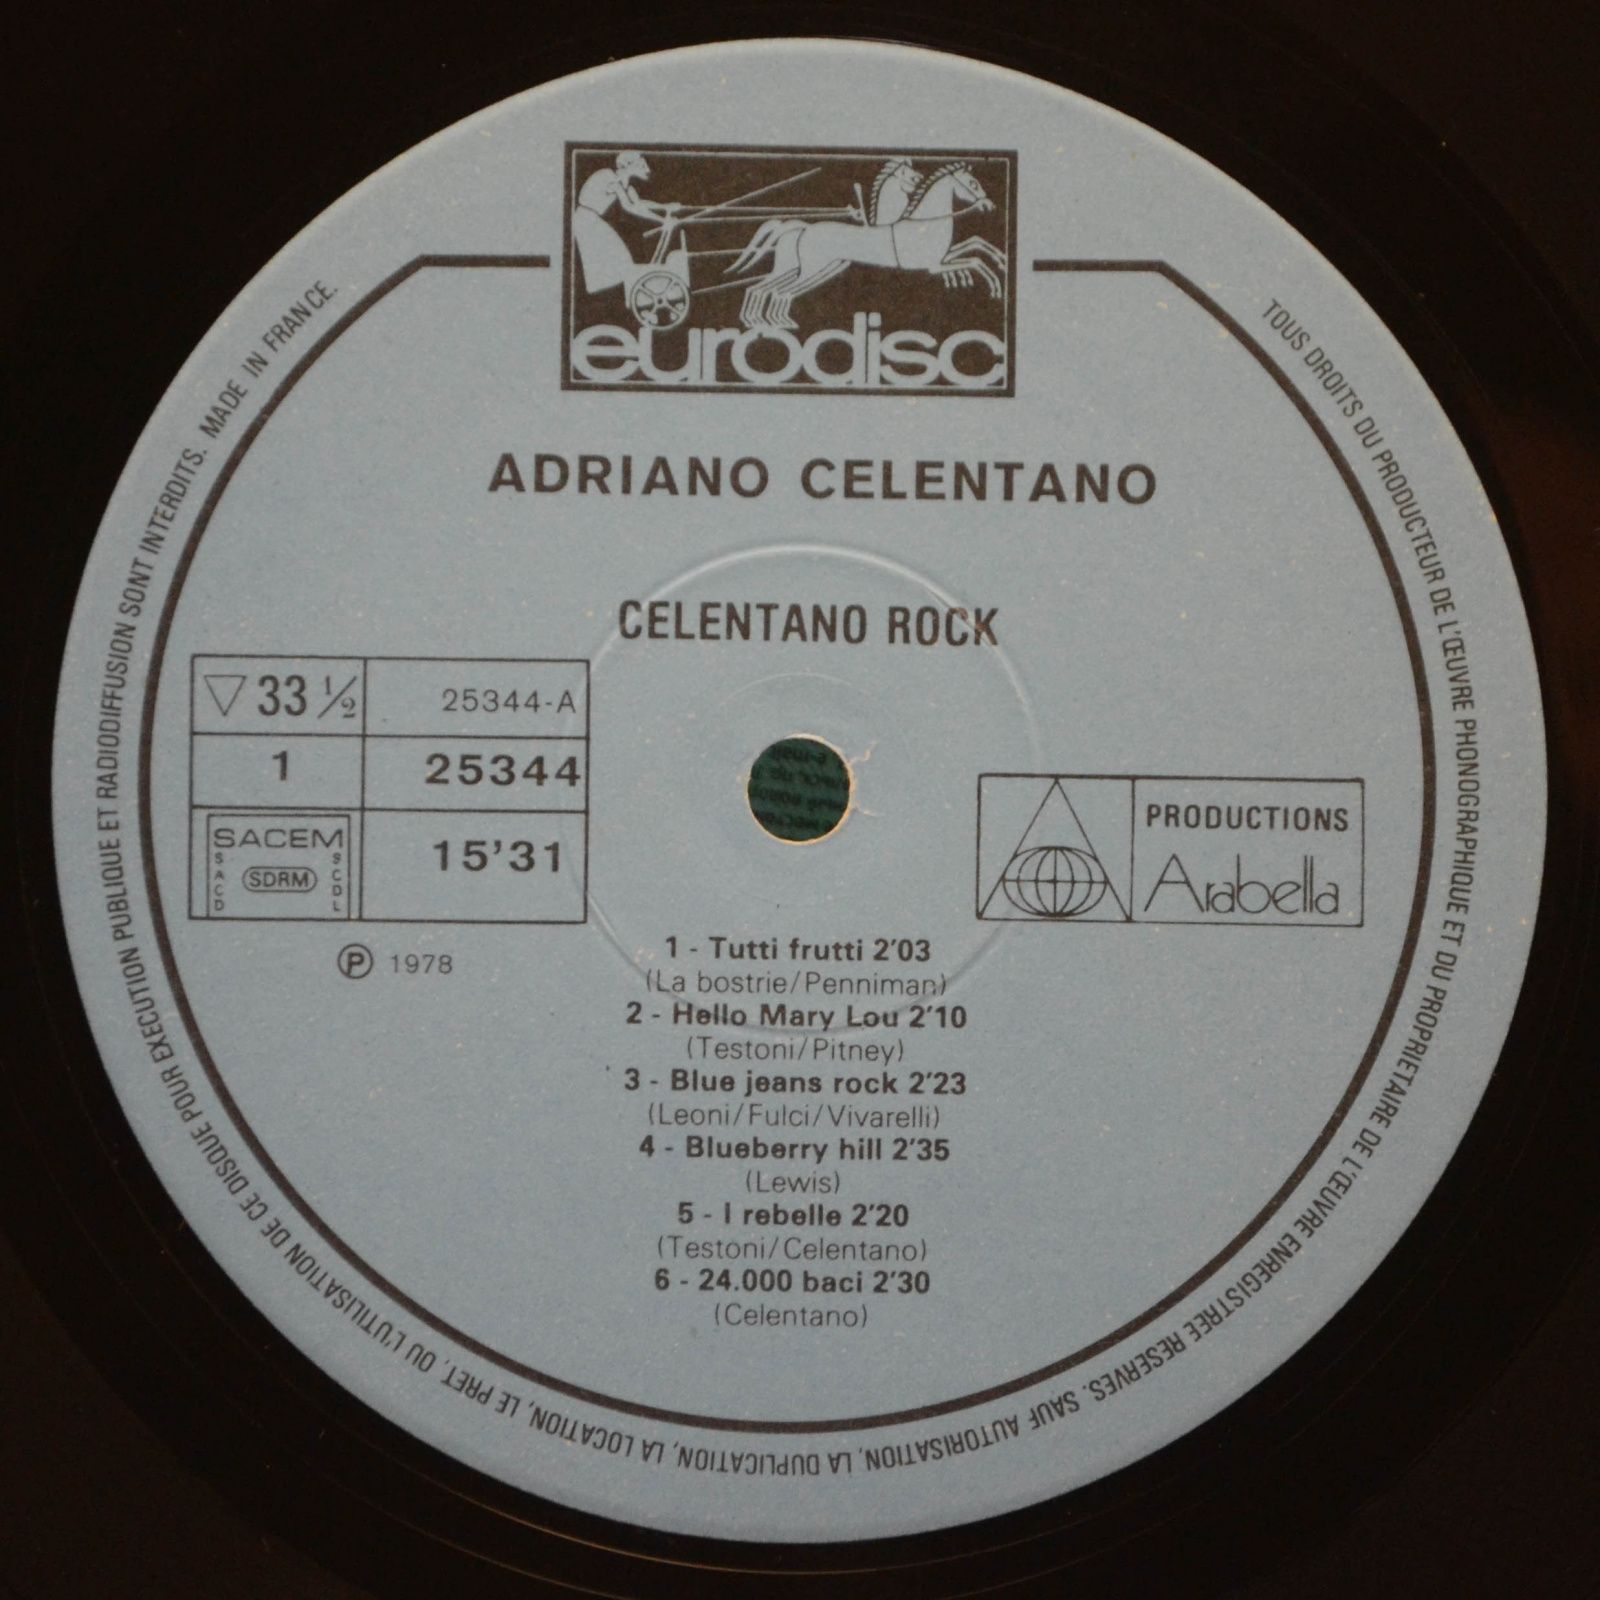 Adriano Celentano — Celentano Rock, 1978